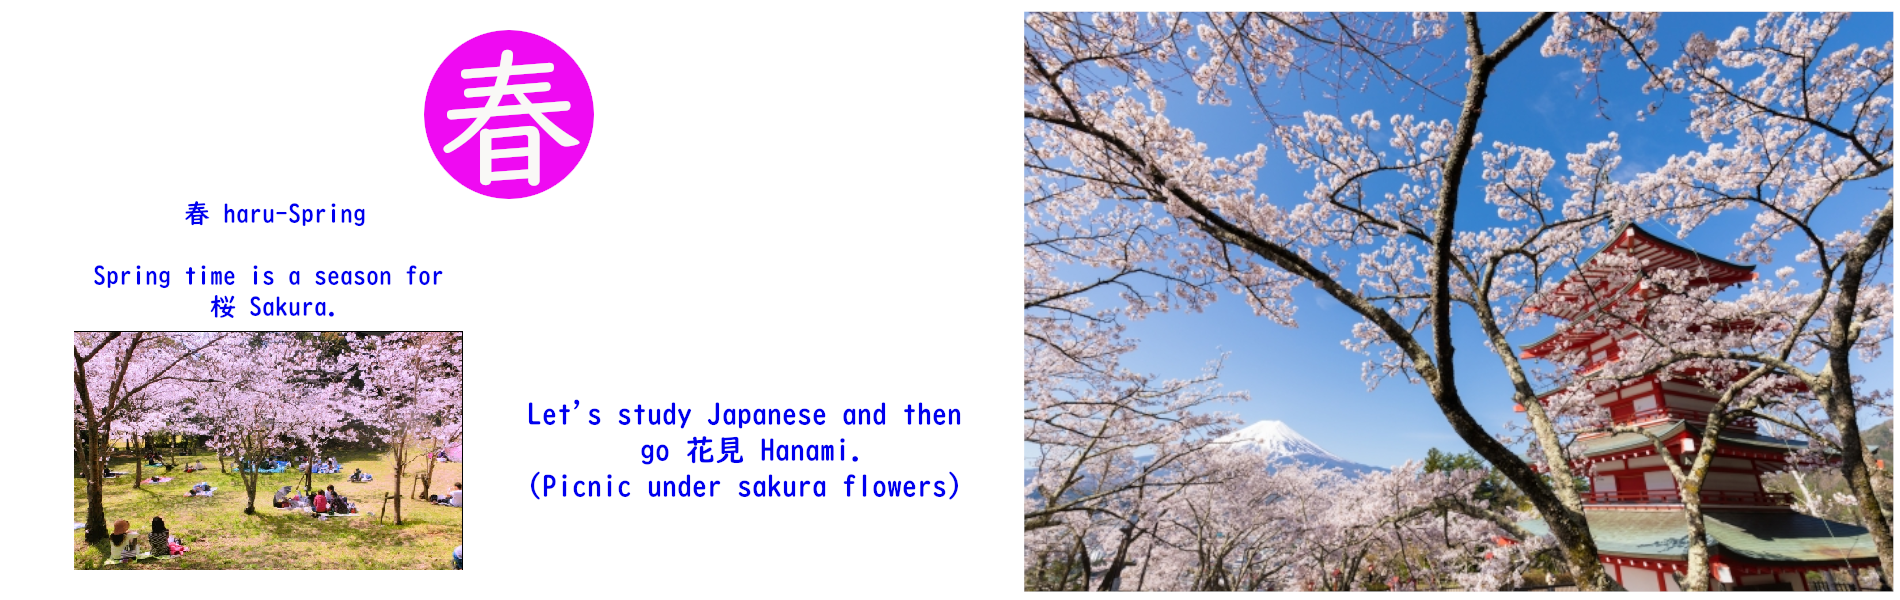 Japanese picknic under Sakura and Sakura with Mr.Fuji